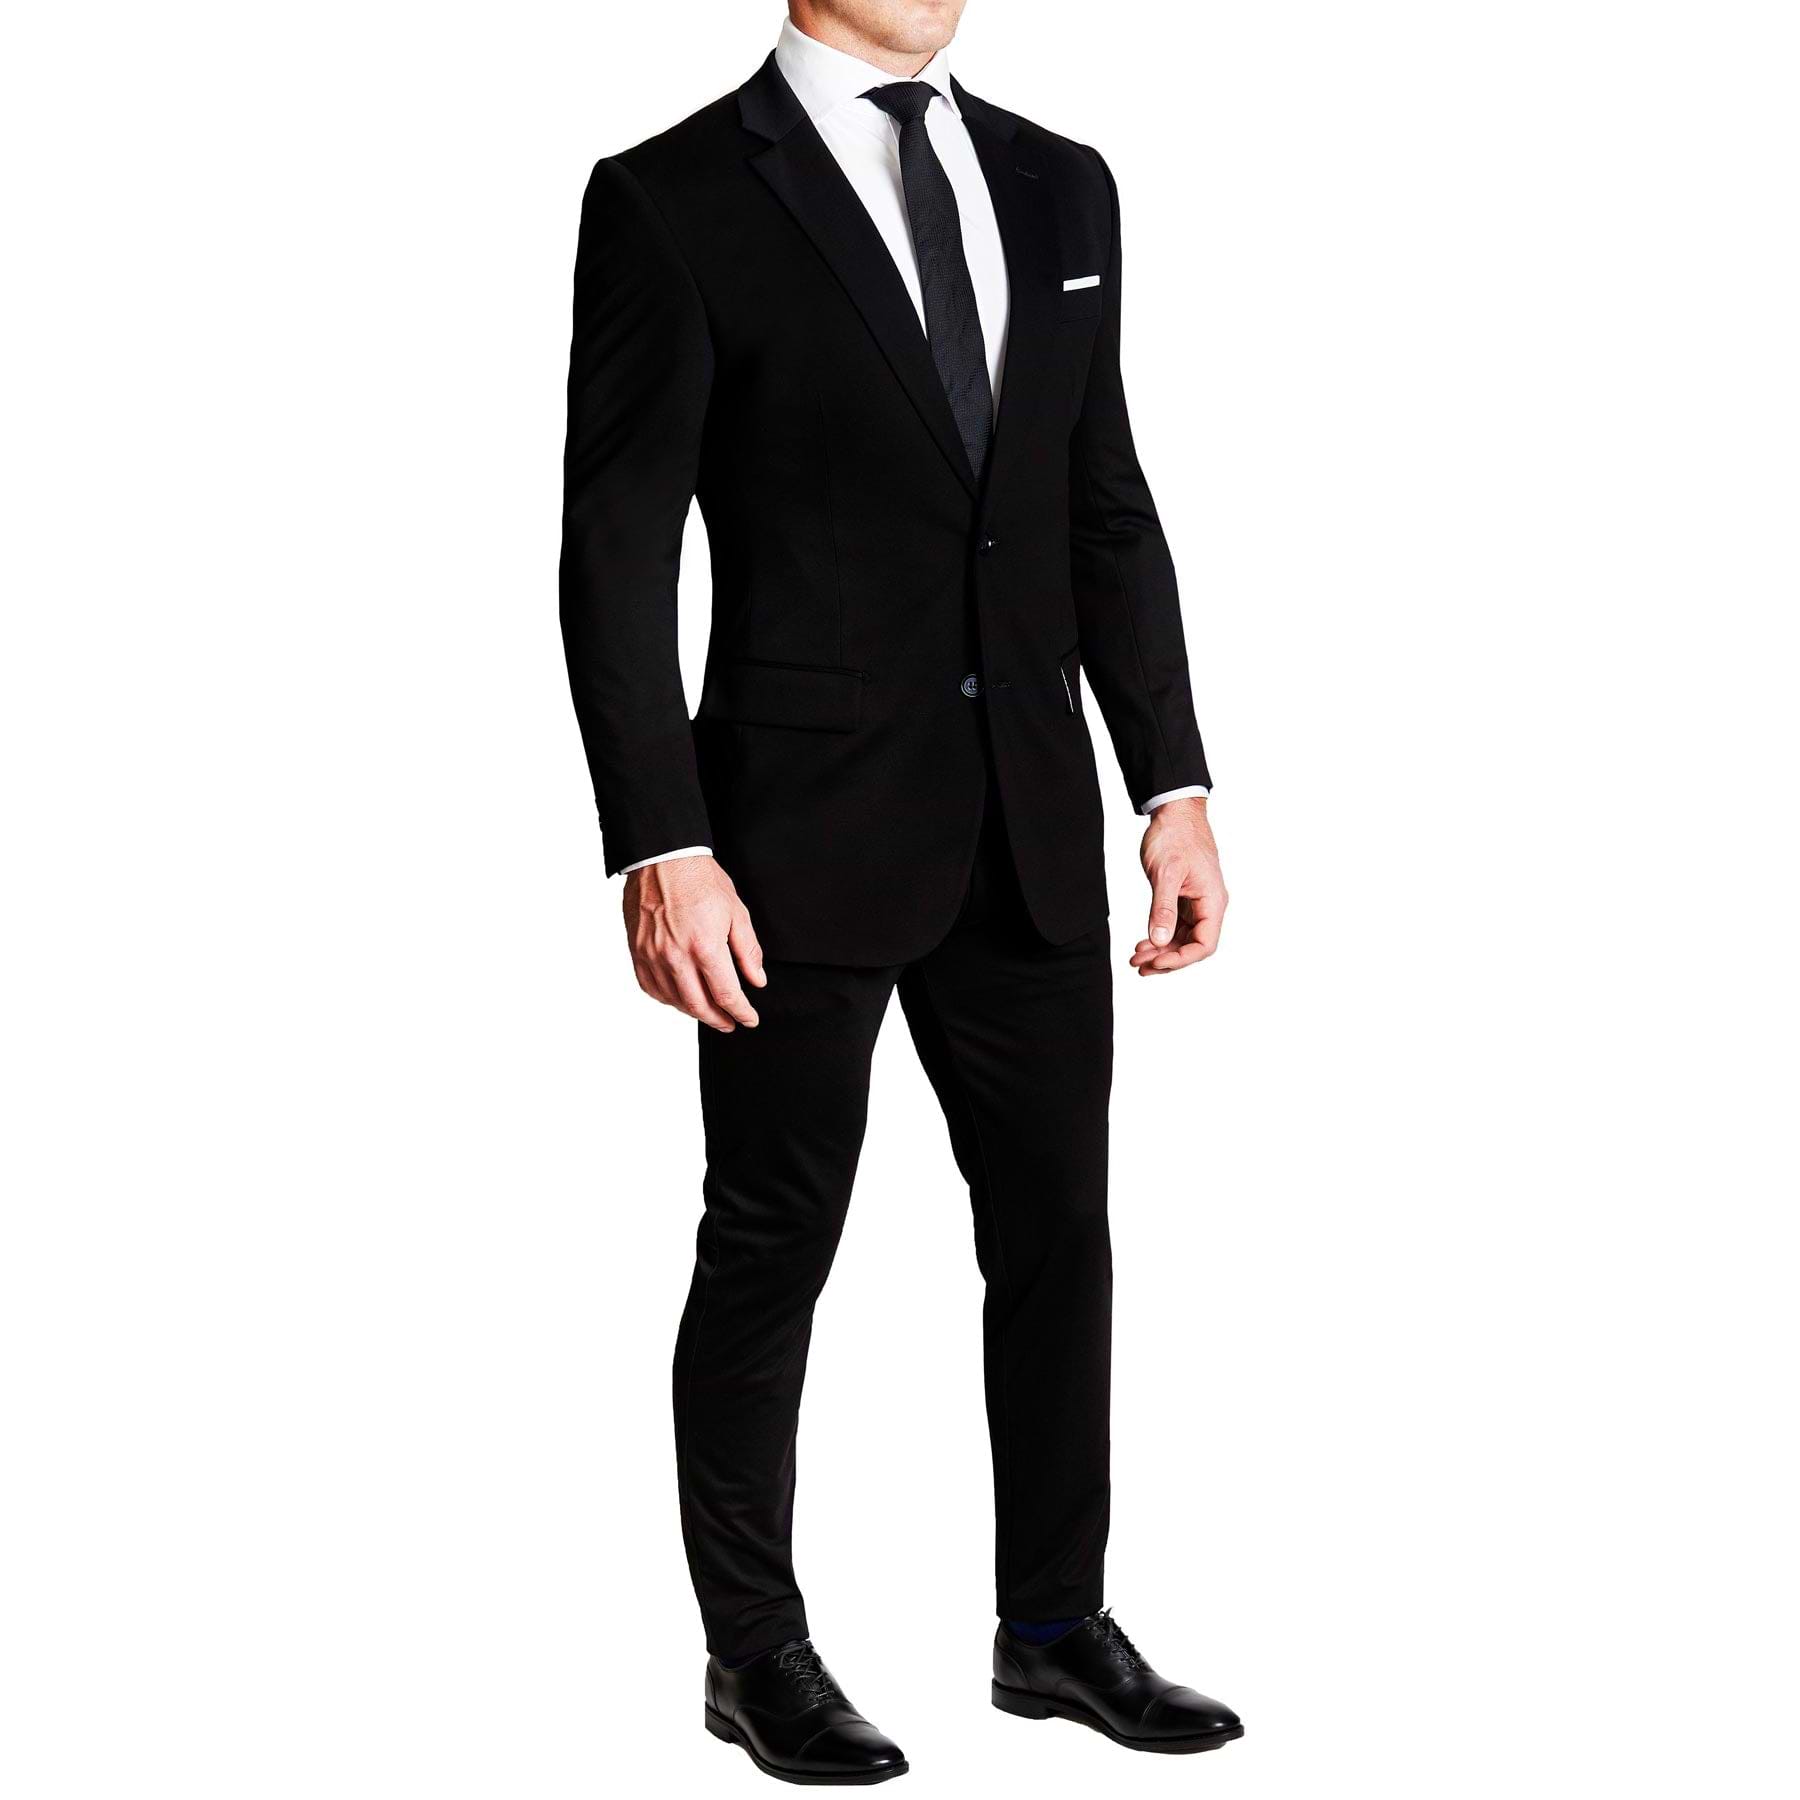 Regular Stretch Tailored Pant - Black, Suit Pants